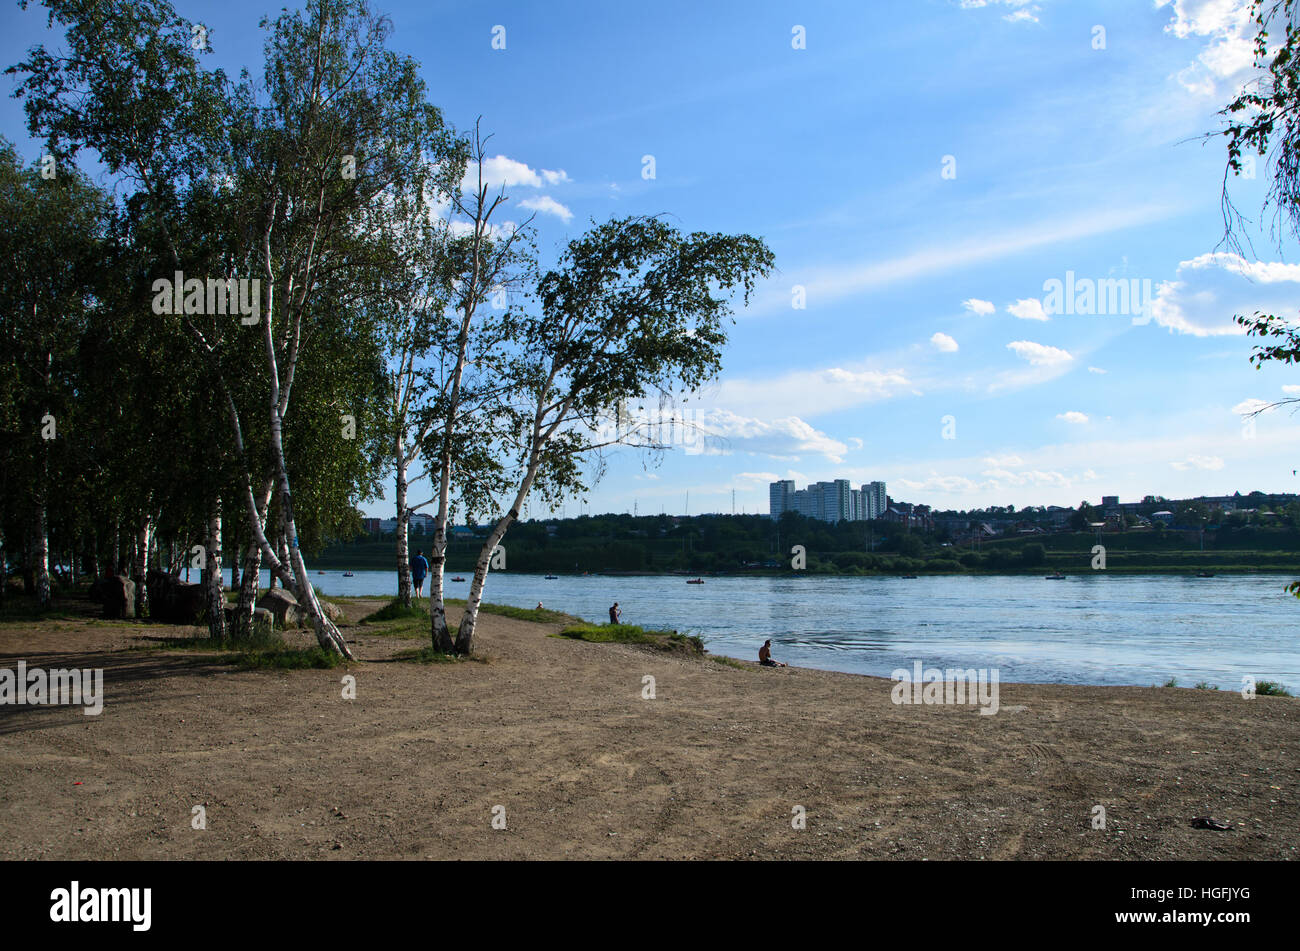 The Angara River passing through the city of Irkutsk Stock Photo